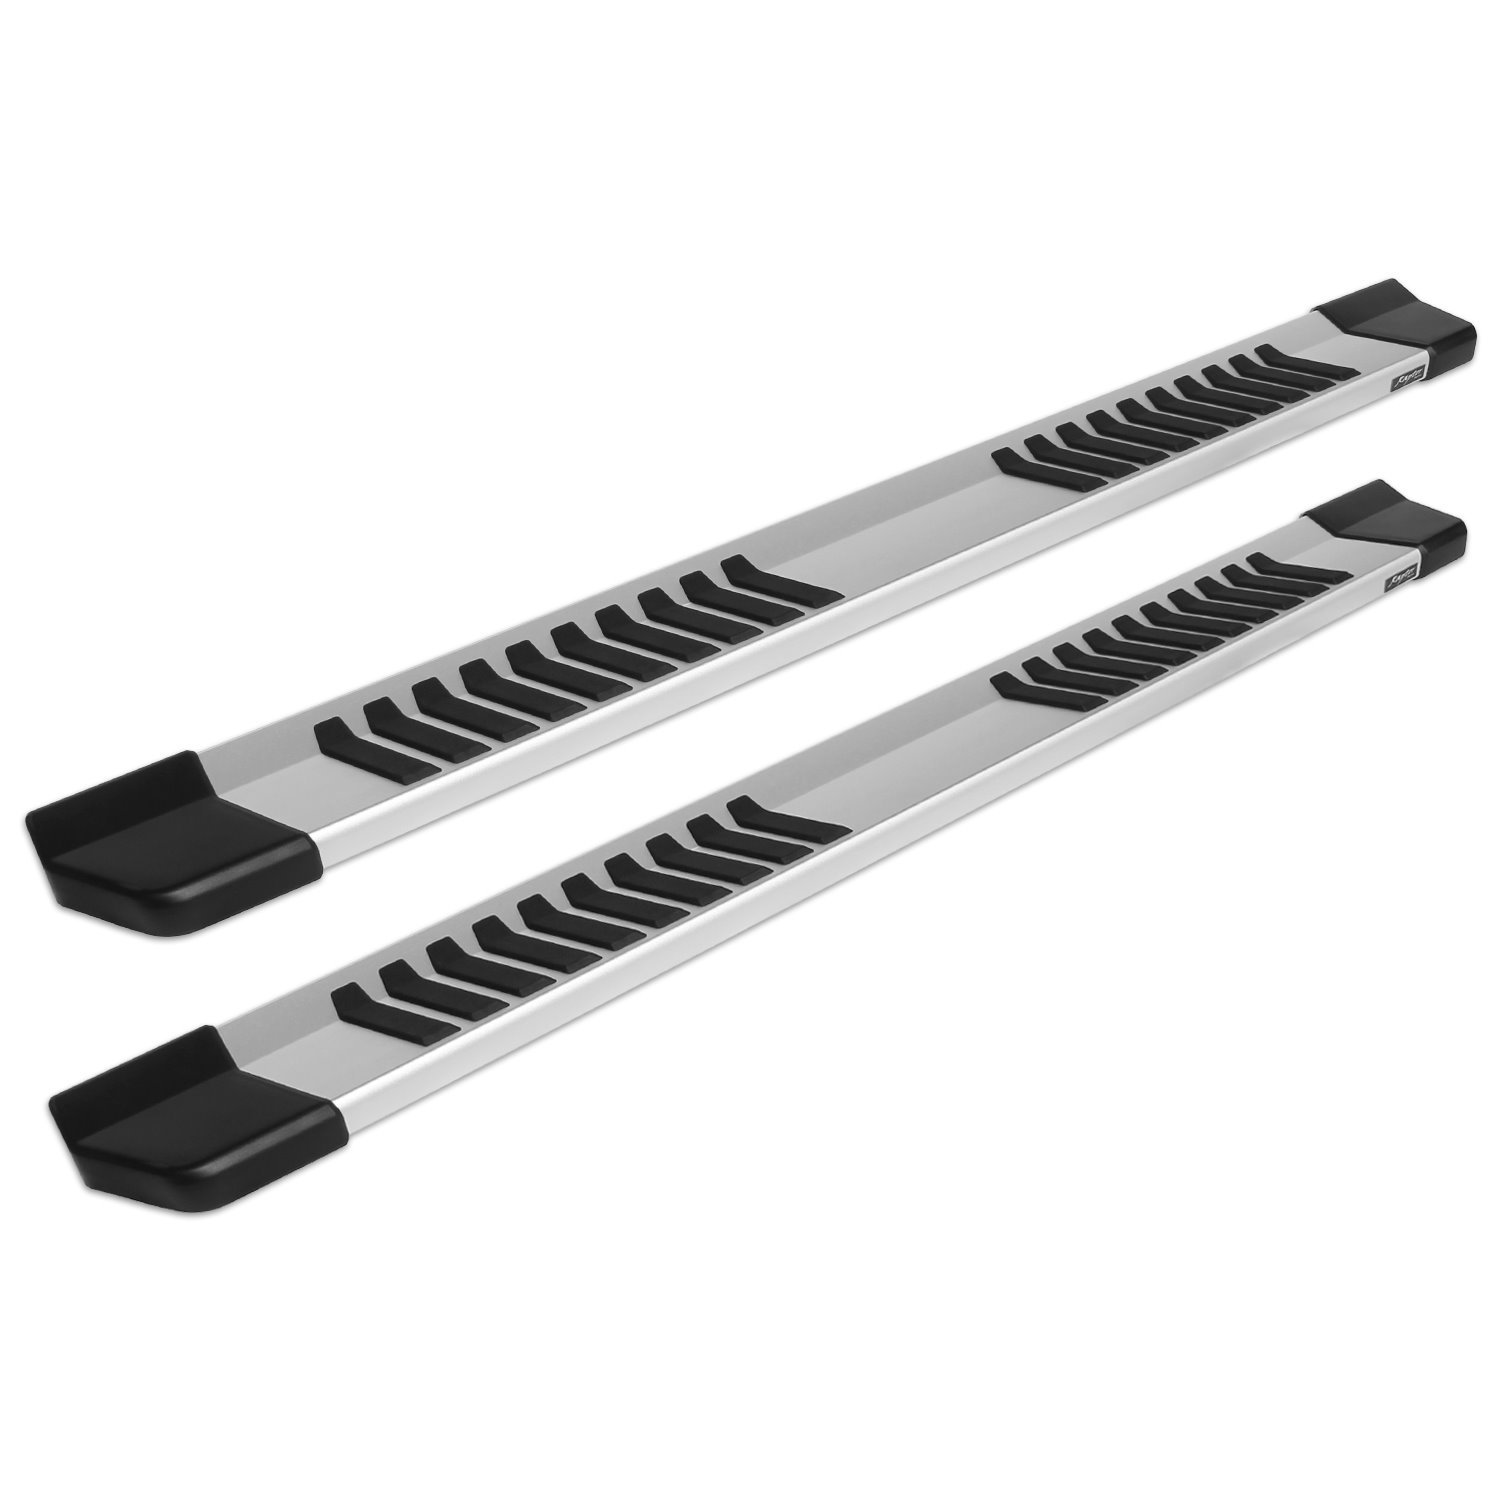 1701-0174 6 in OEM Style Slide Track Running Boards, Brushed Aluminum, 07-19 Chevy Silverado/GMC Sierra 1500/2500/3500